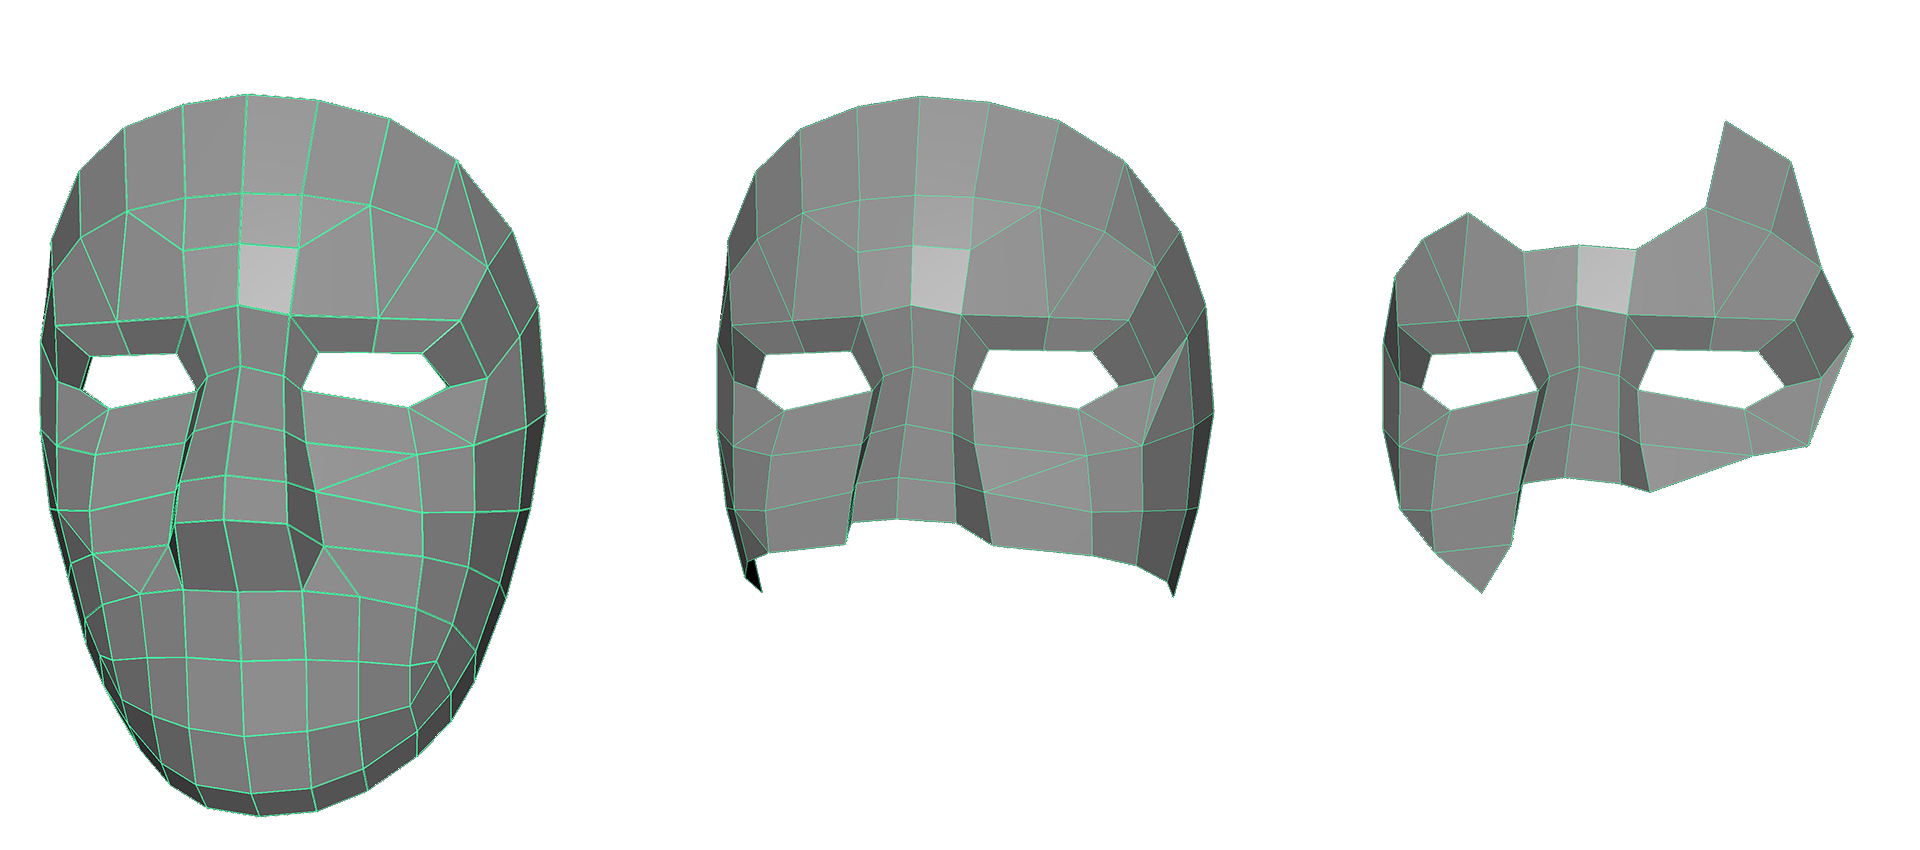 Meta Spark AR mask 3D model filter